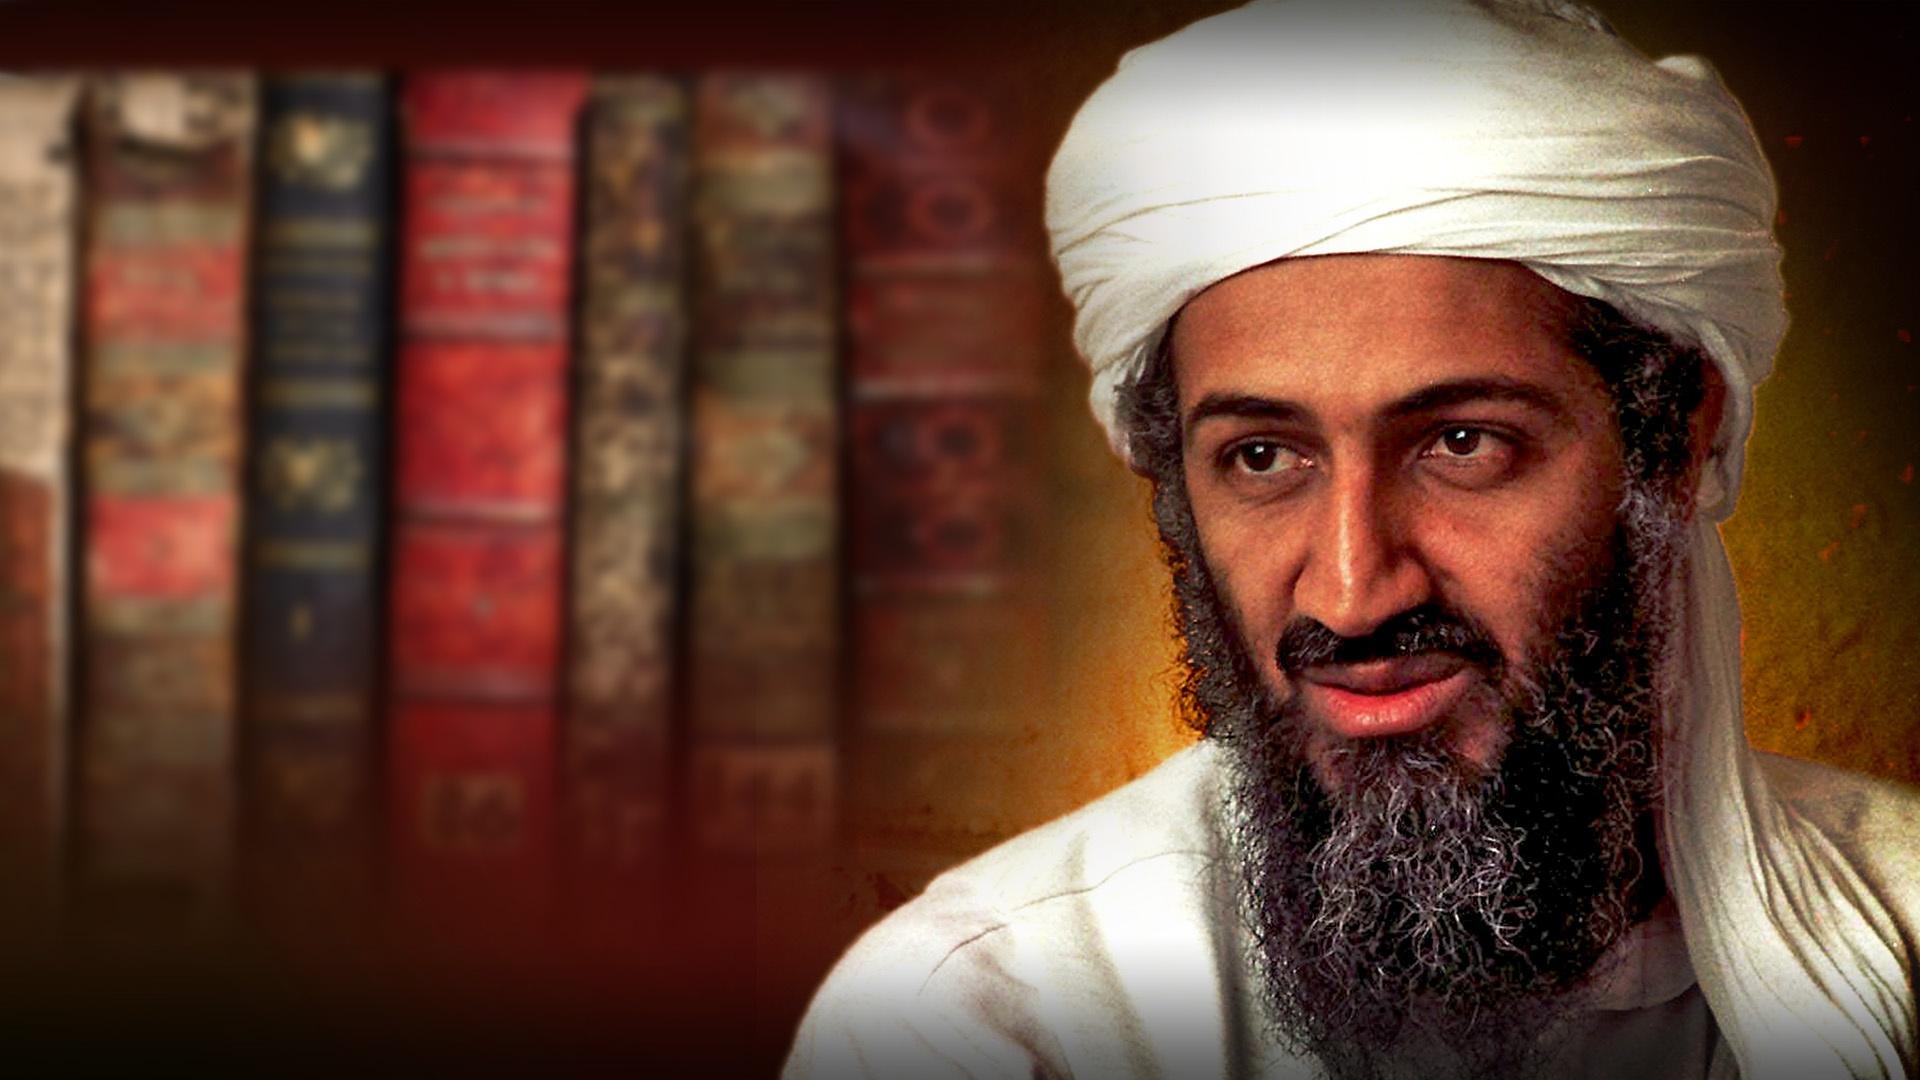 PHOTOS the Life of Osama Bin Laden